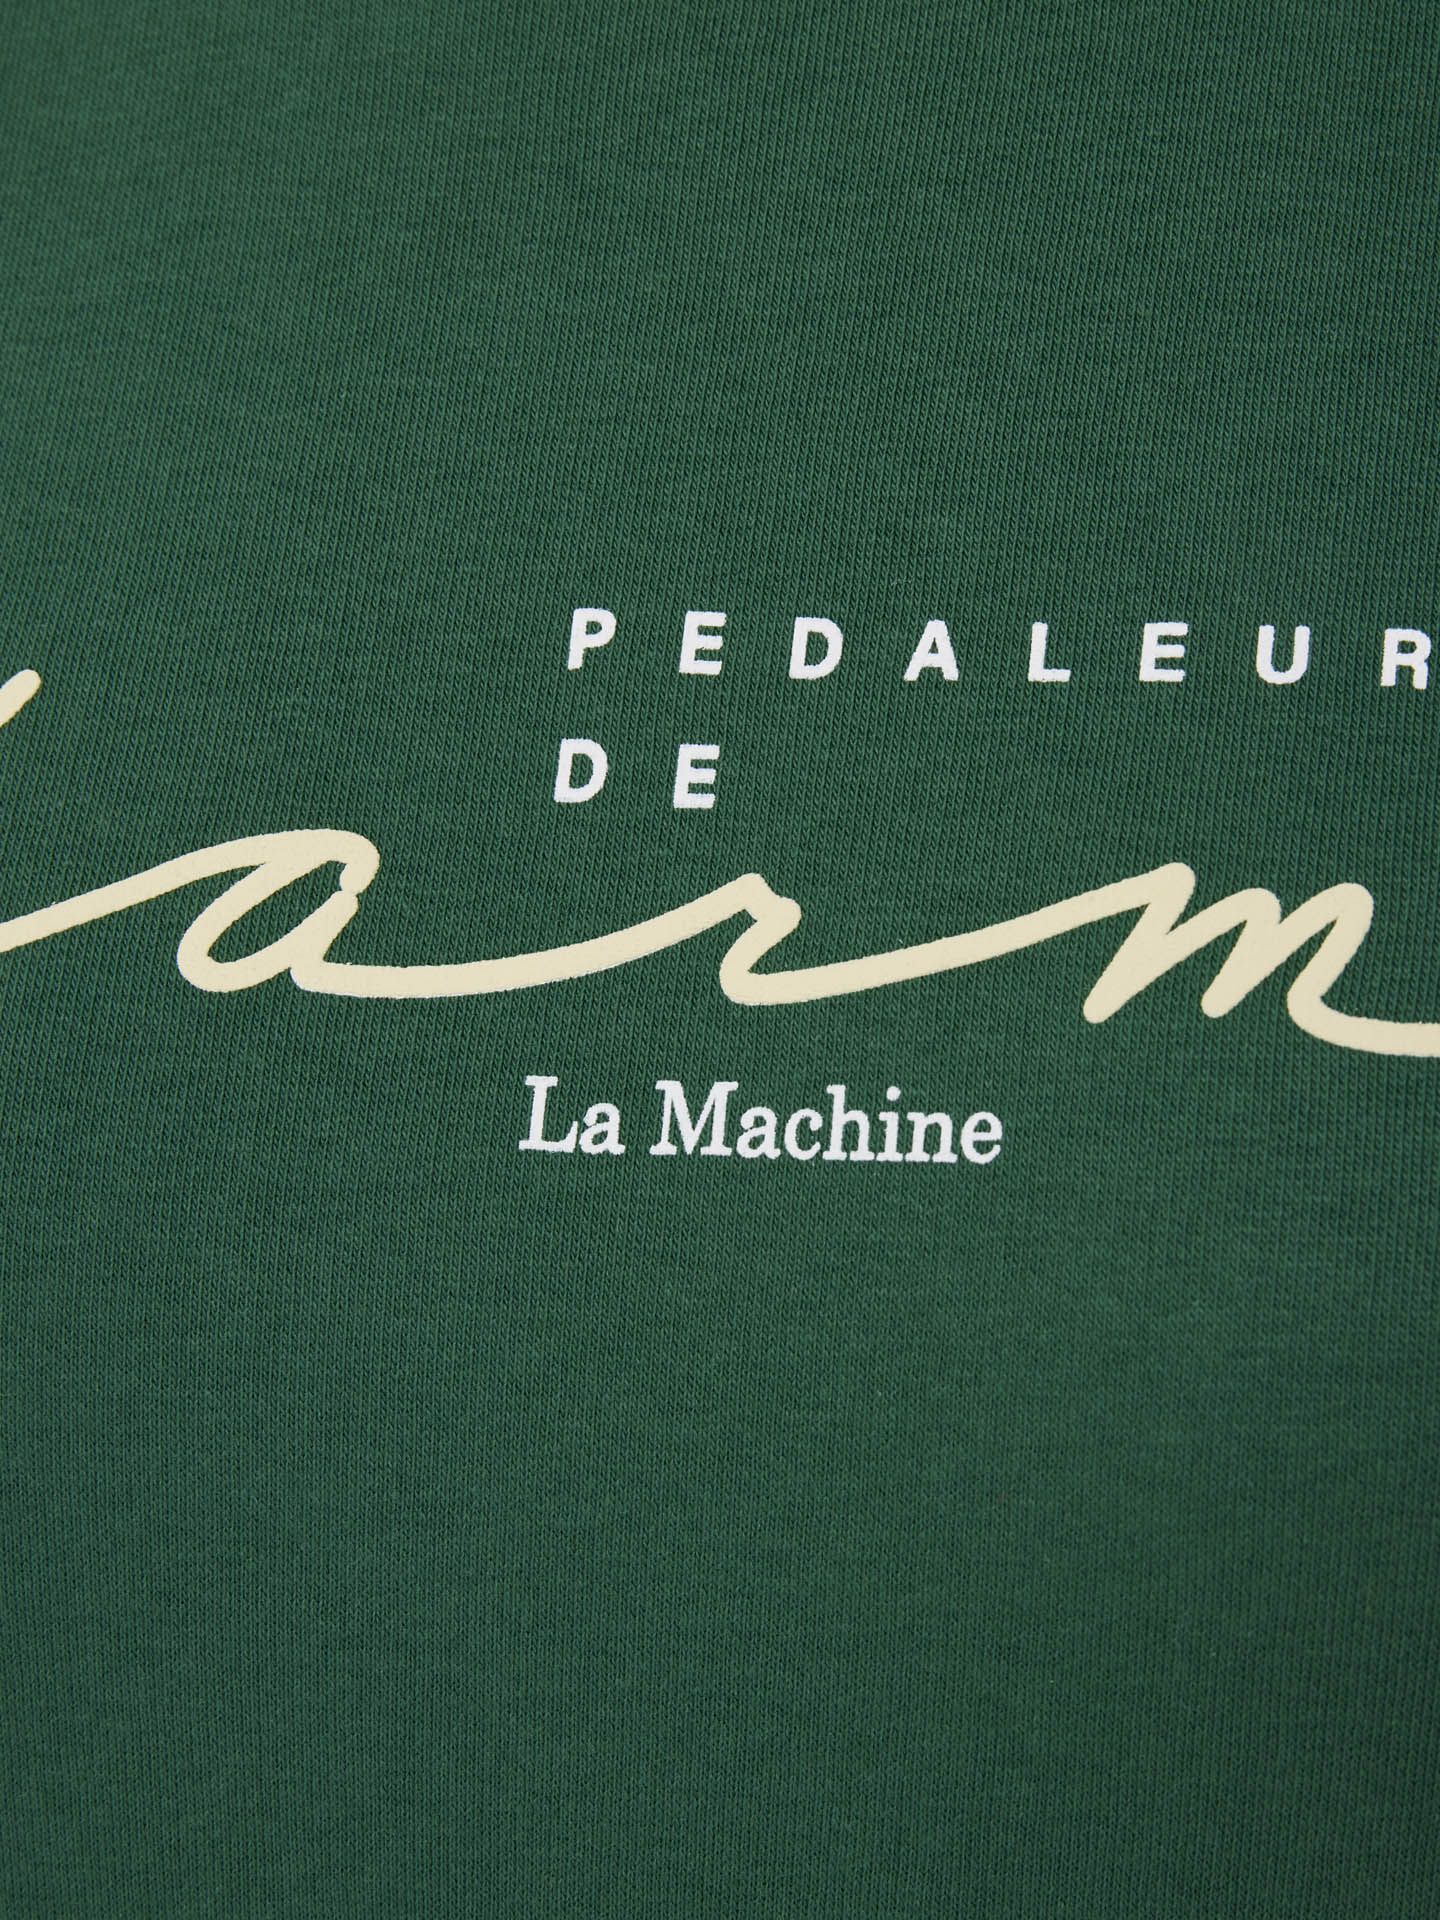 Pedaleur de Charme - Women's sweatshirt - La Machine Cycling Club